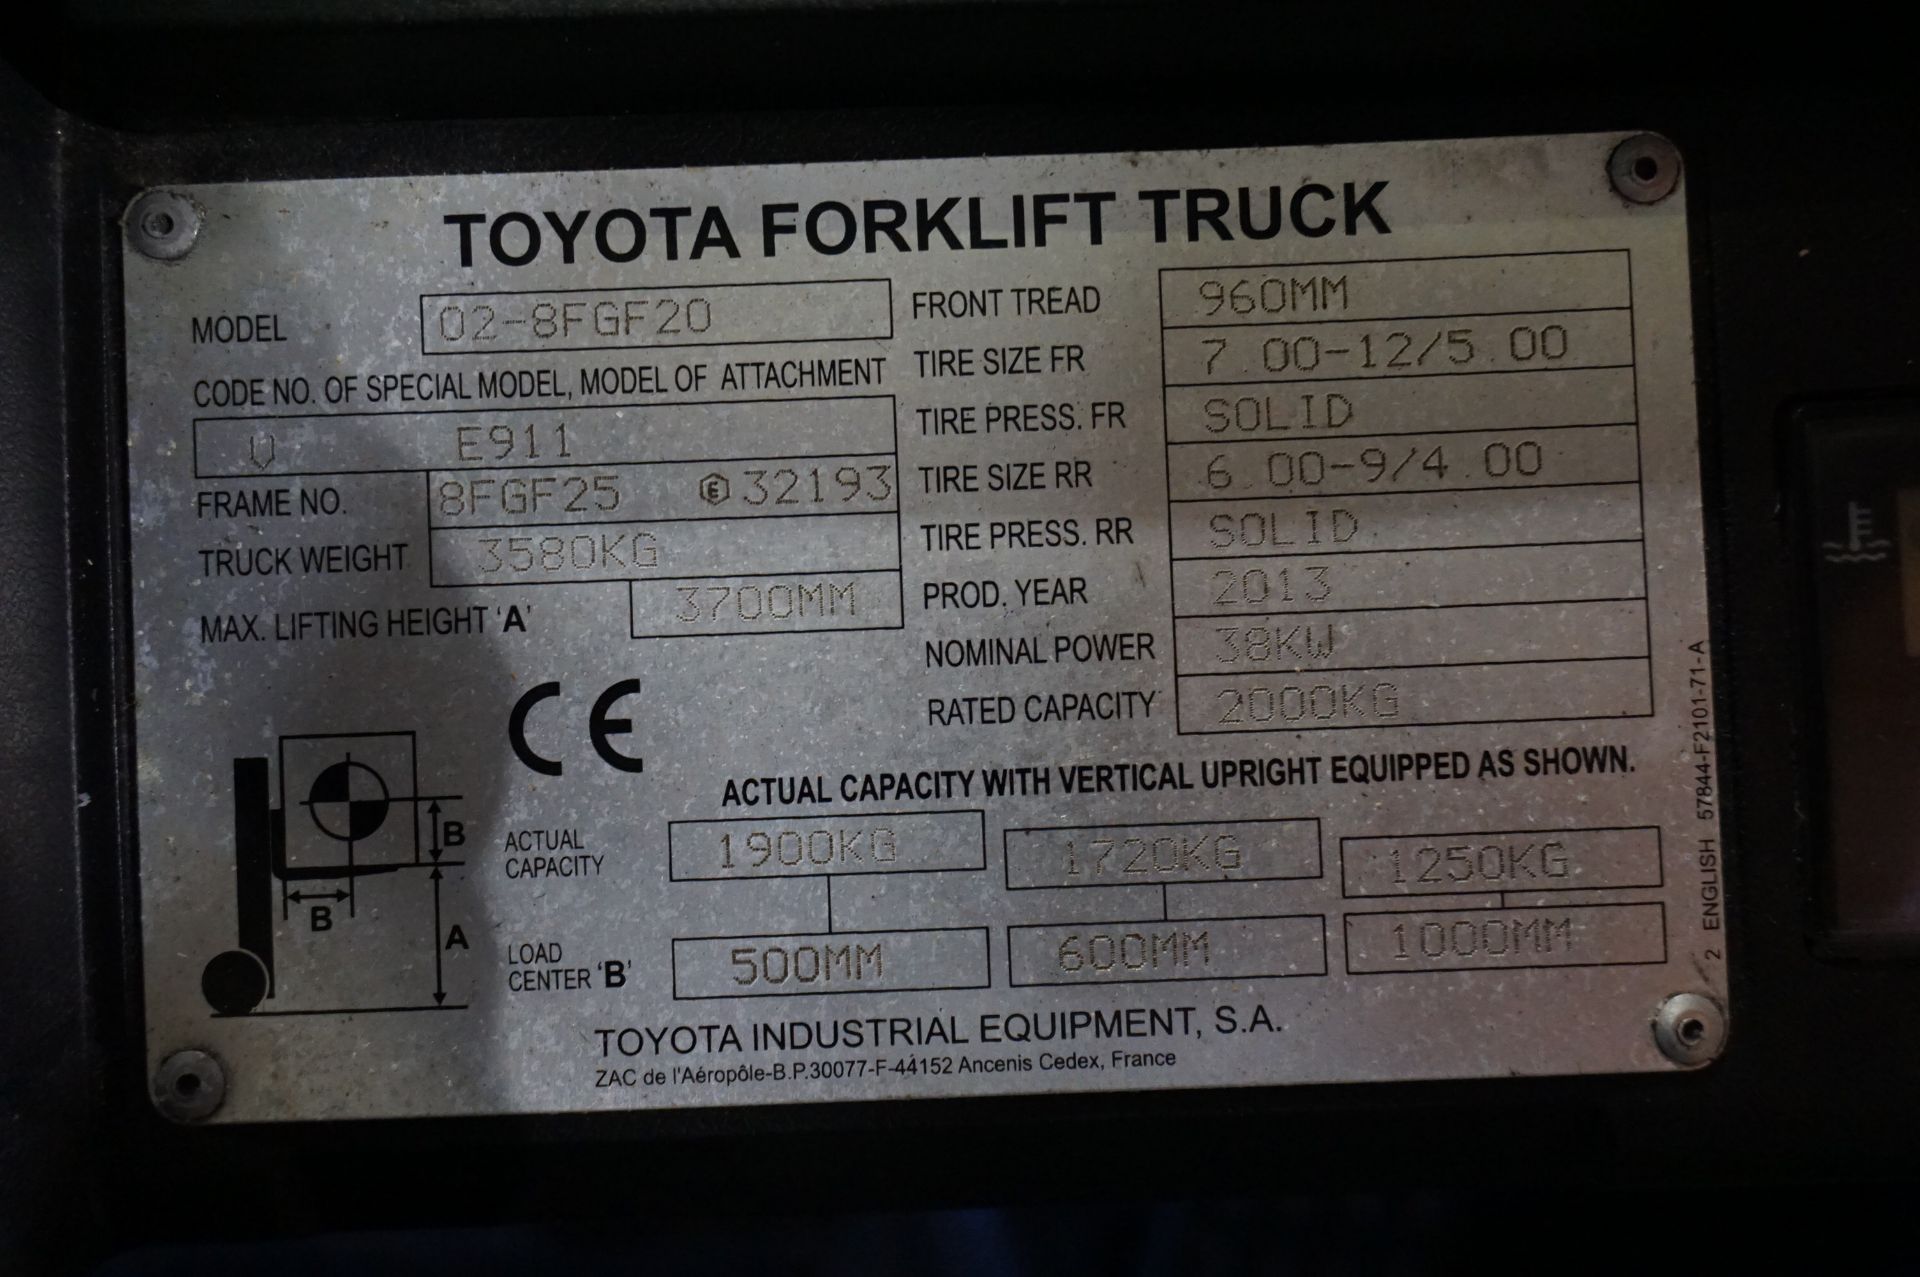 Toyota, Model: O2-8FGF20, 2000kg LPG forklift truck, Serial No. E911, Hours: 5589 (2013) (Separate - Image 6 of 7